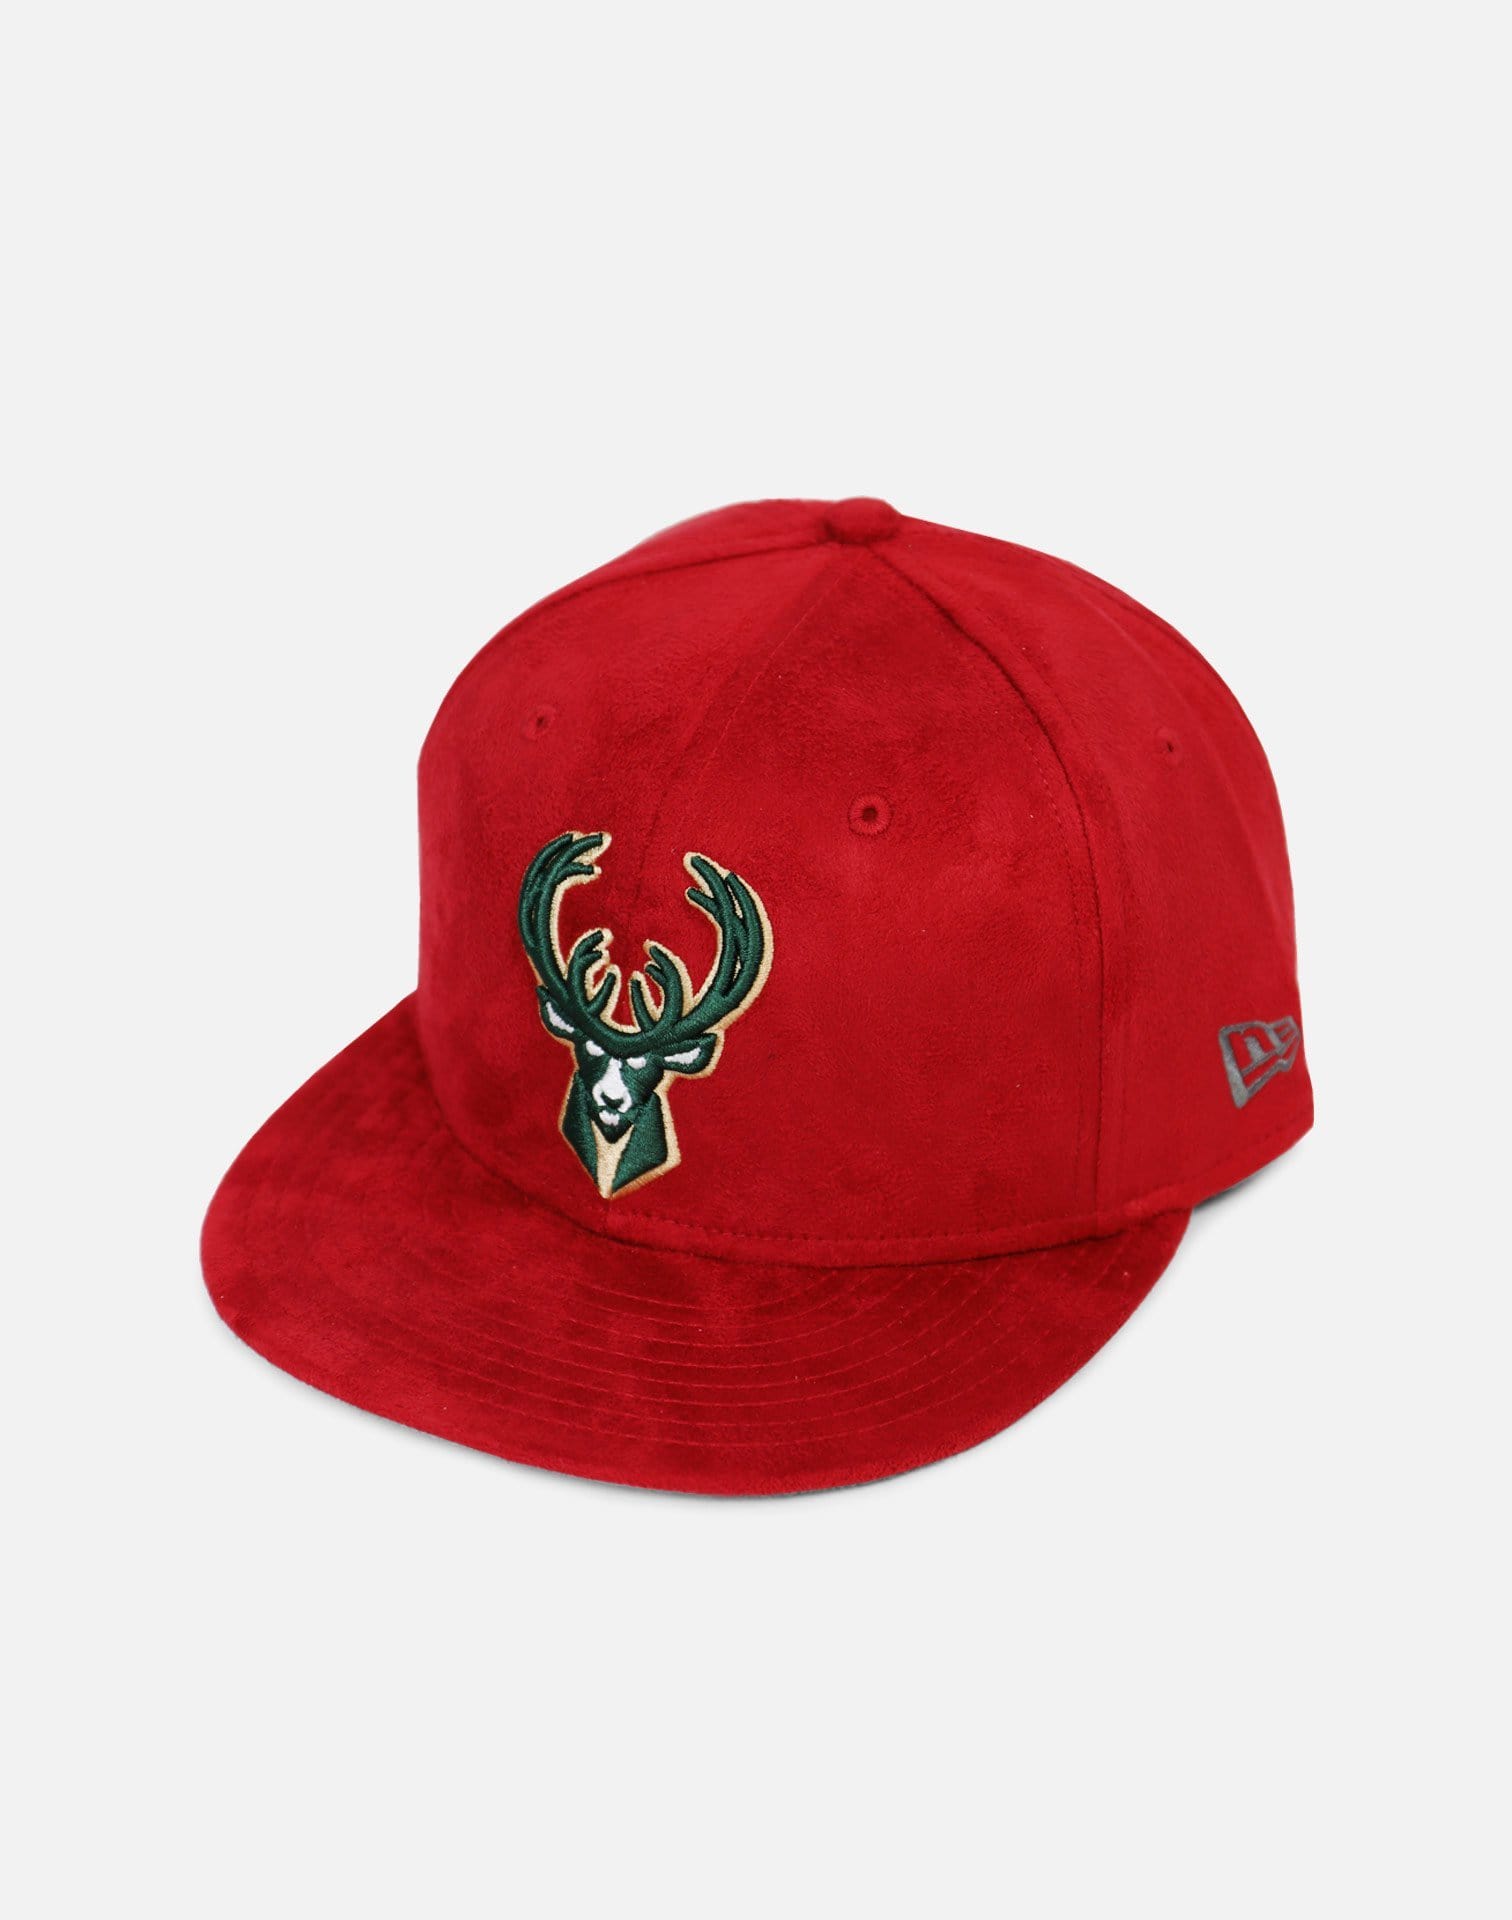 New Era Milwaukee Bucks Suede Snapback Hat (Red)